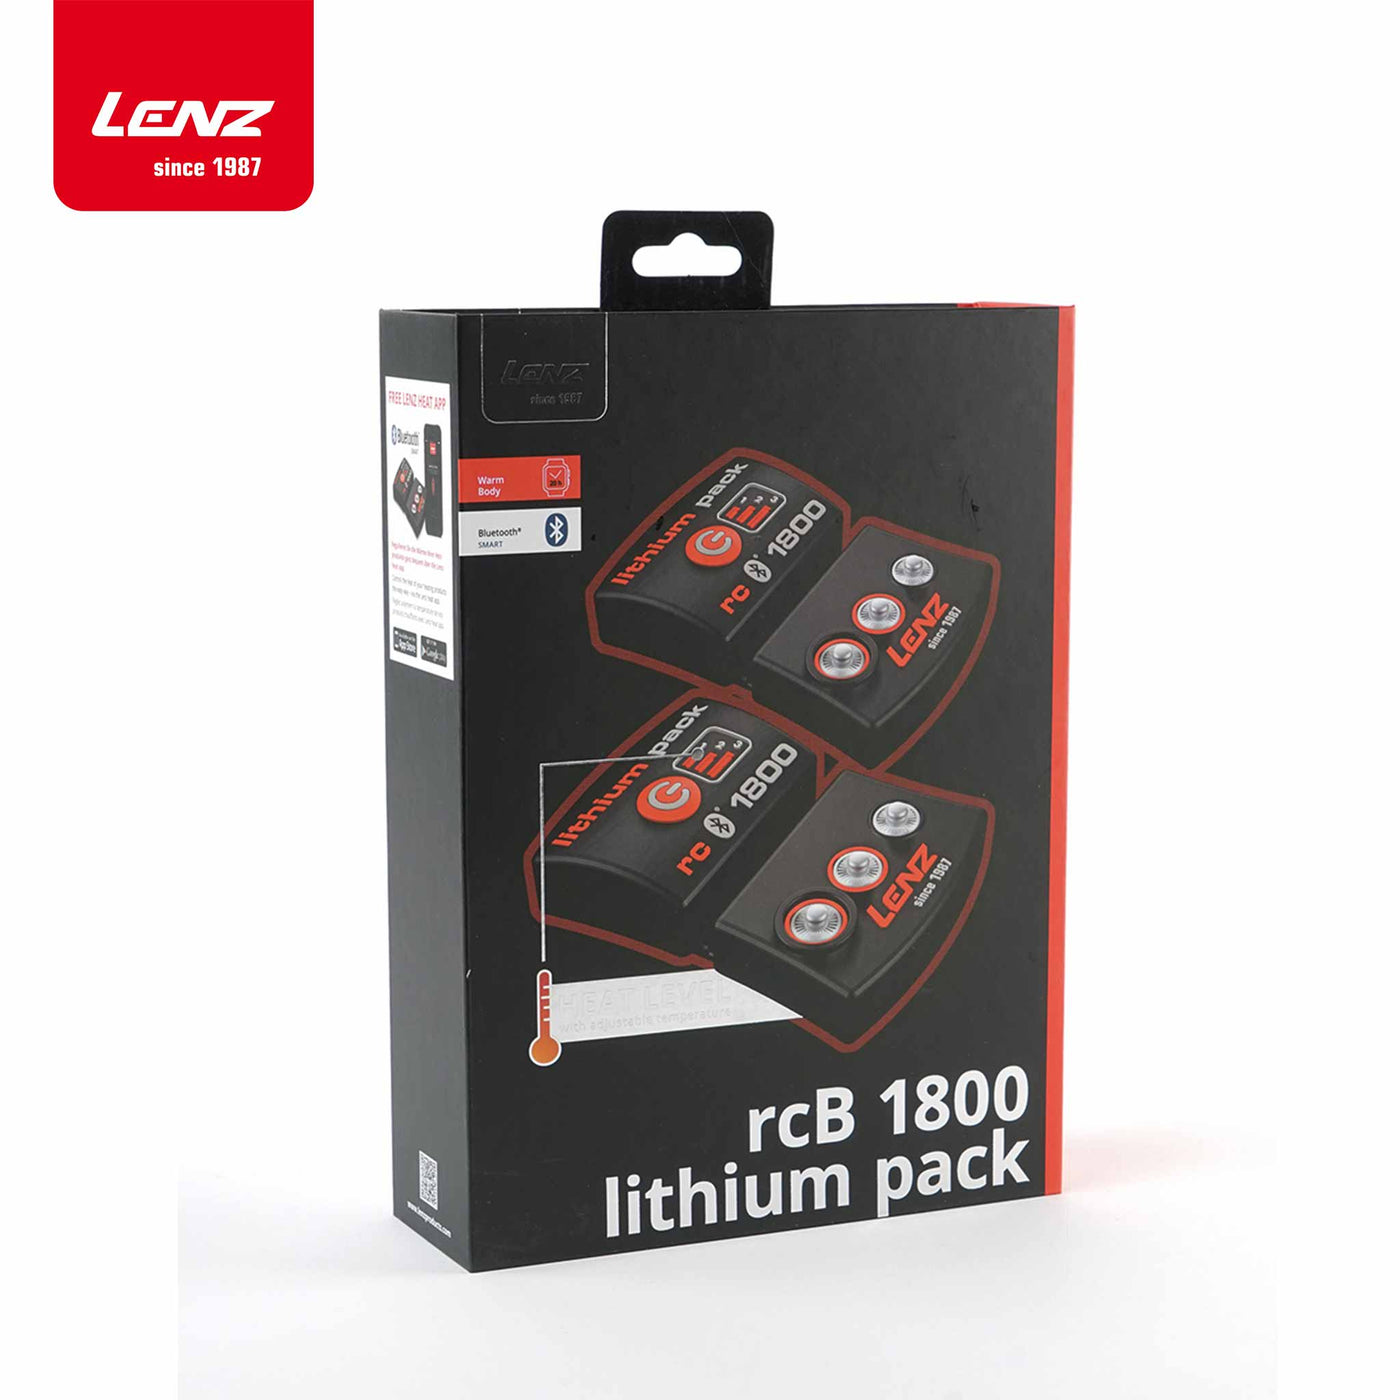 Lenz Lithium Pack rcB 1800 avec Bluetooth